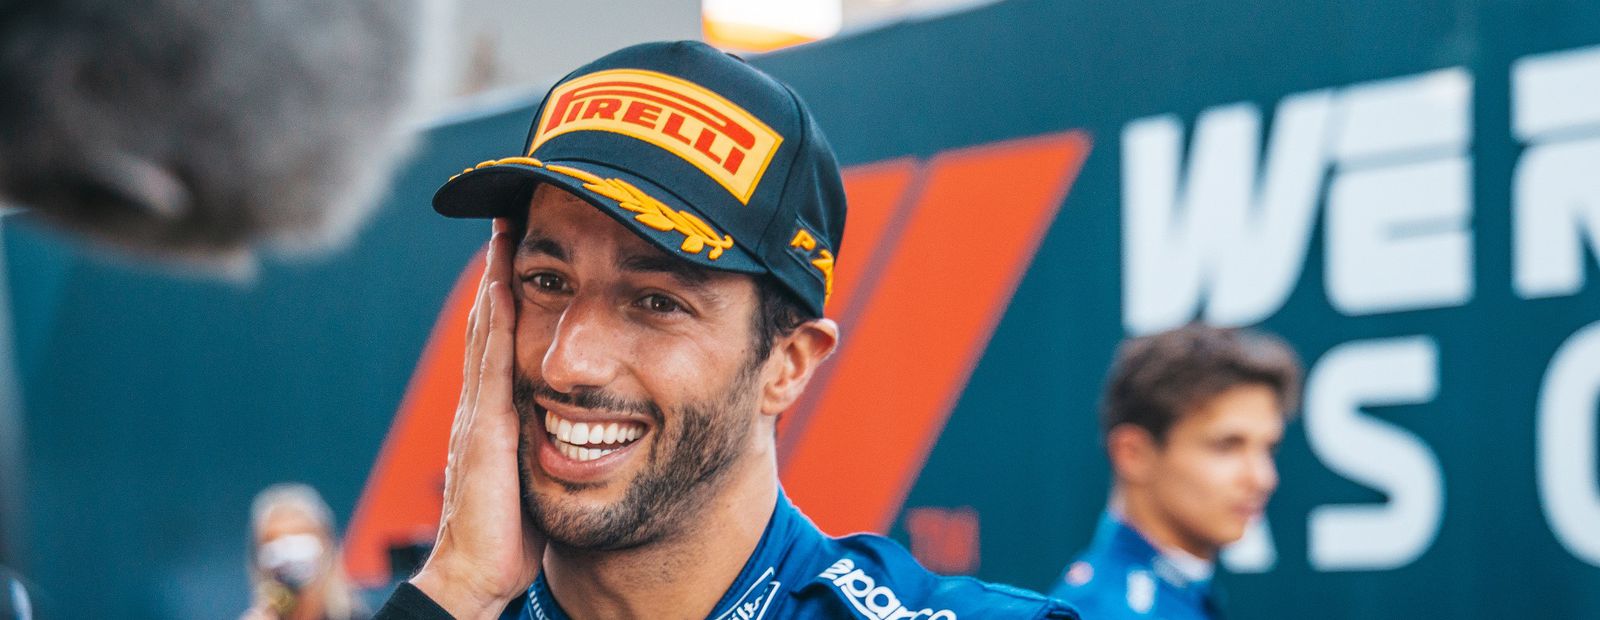 Ricciardo's resurgence